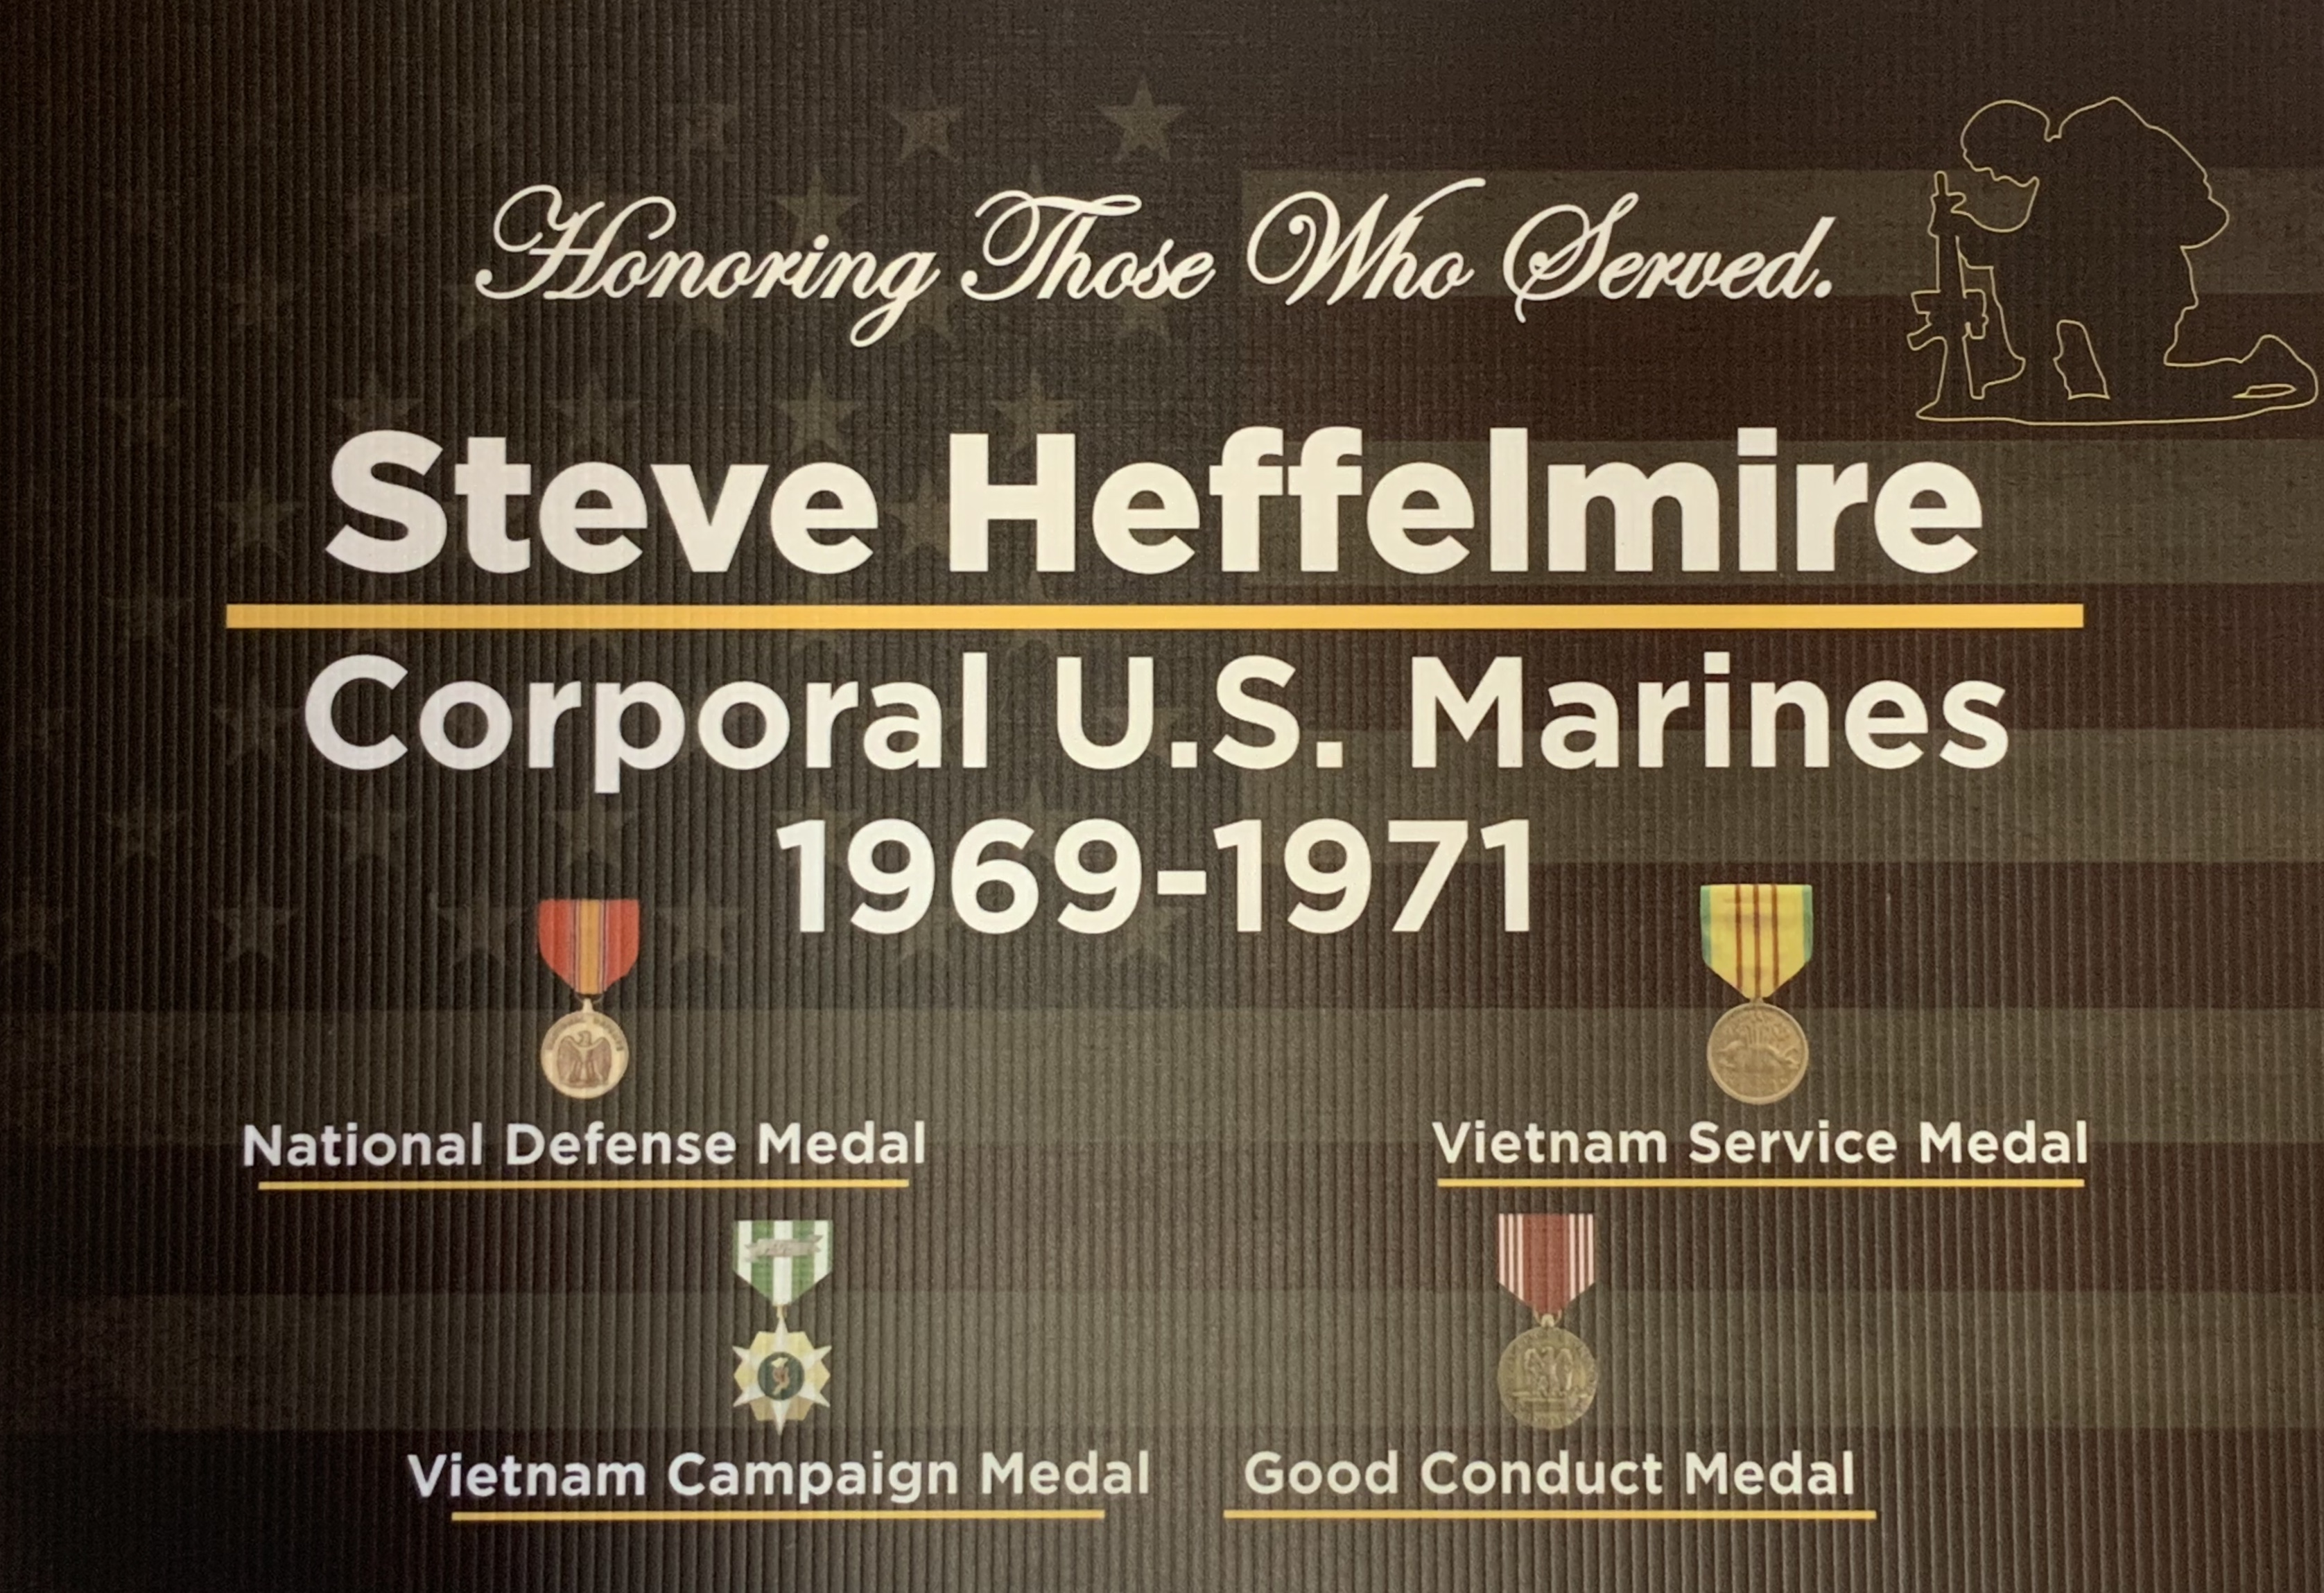 Steve heffelmire